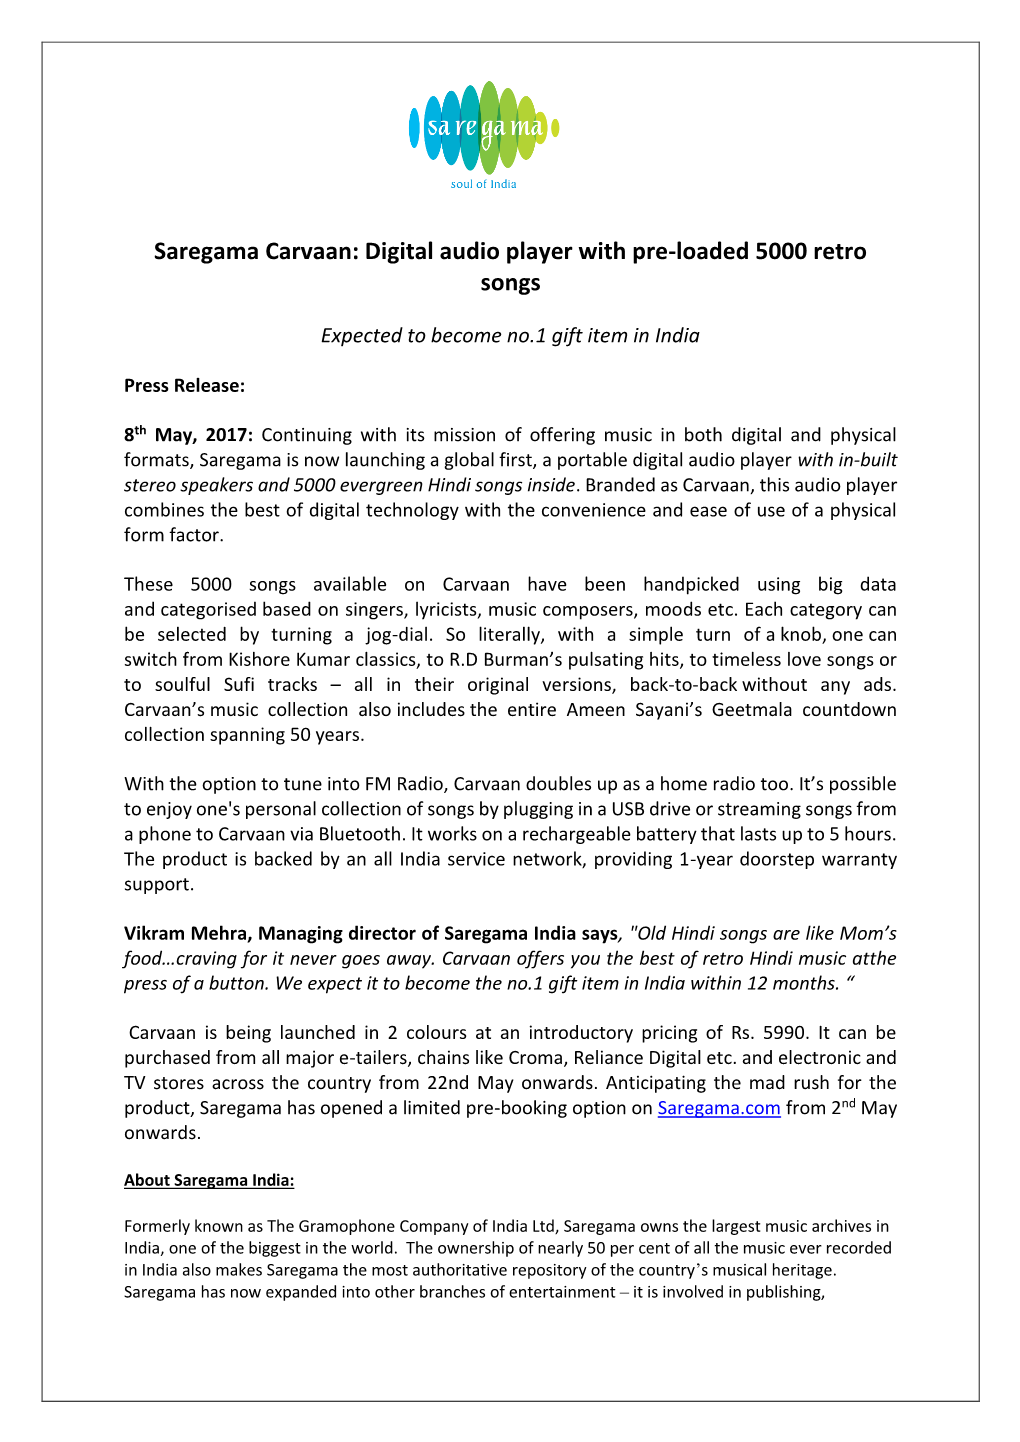 Saregama Carvaan: Digital Audio Player with Pre-Loaded 5000 Retro Songs